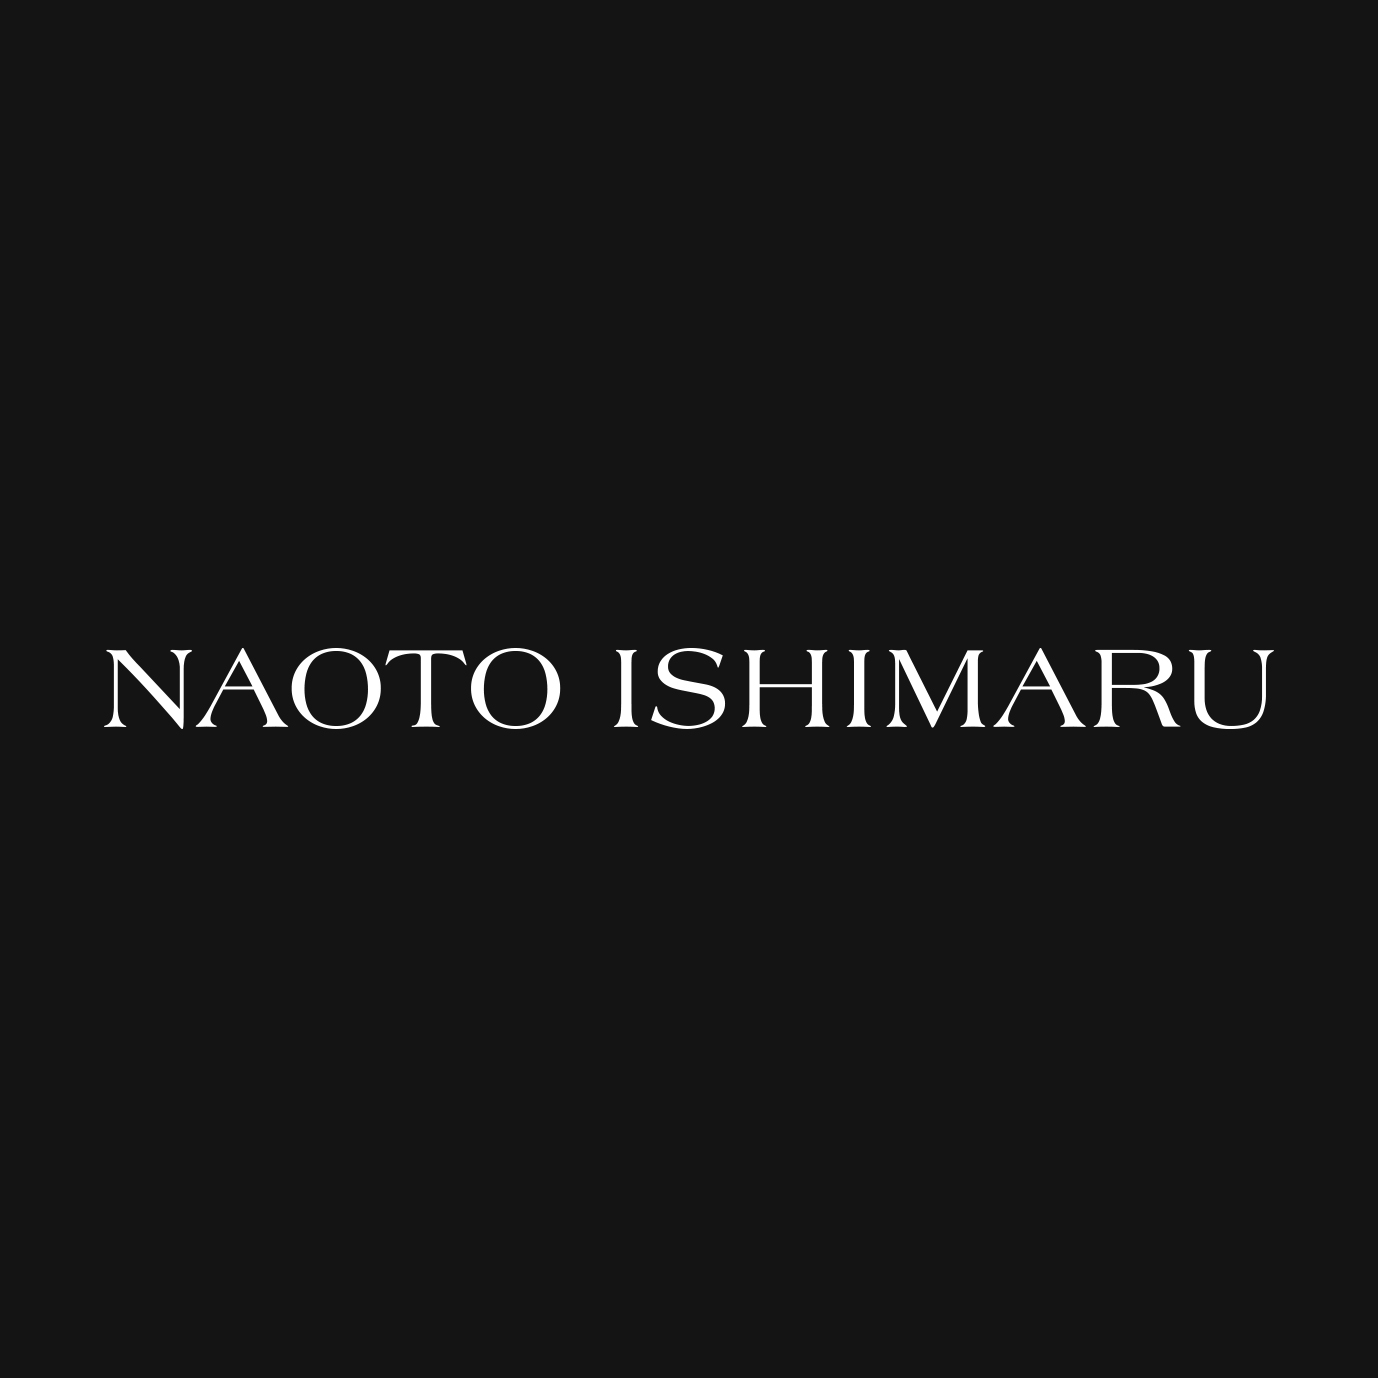 Naoto Ishimaru